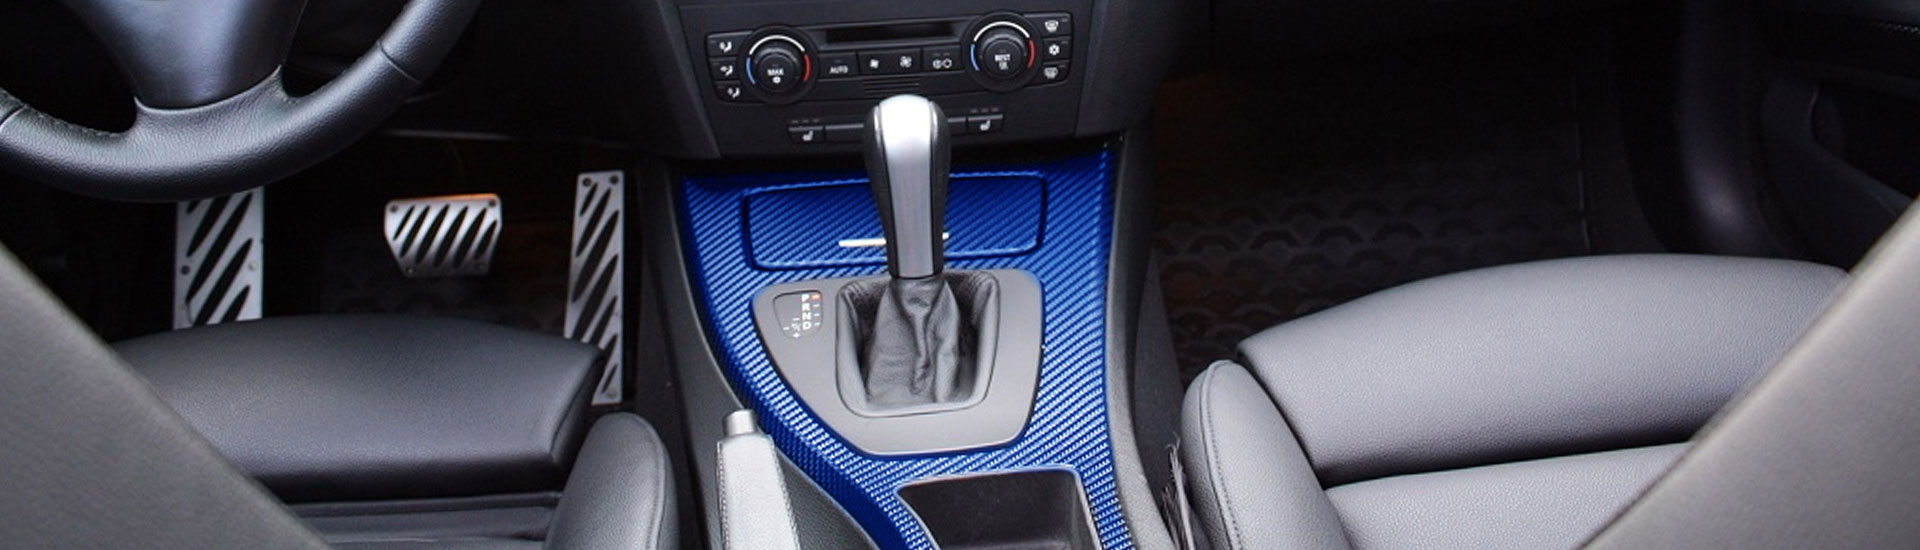 Blue carbon fiber dash kit